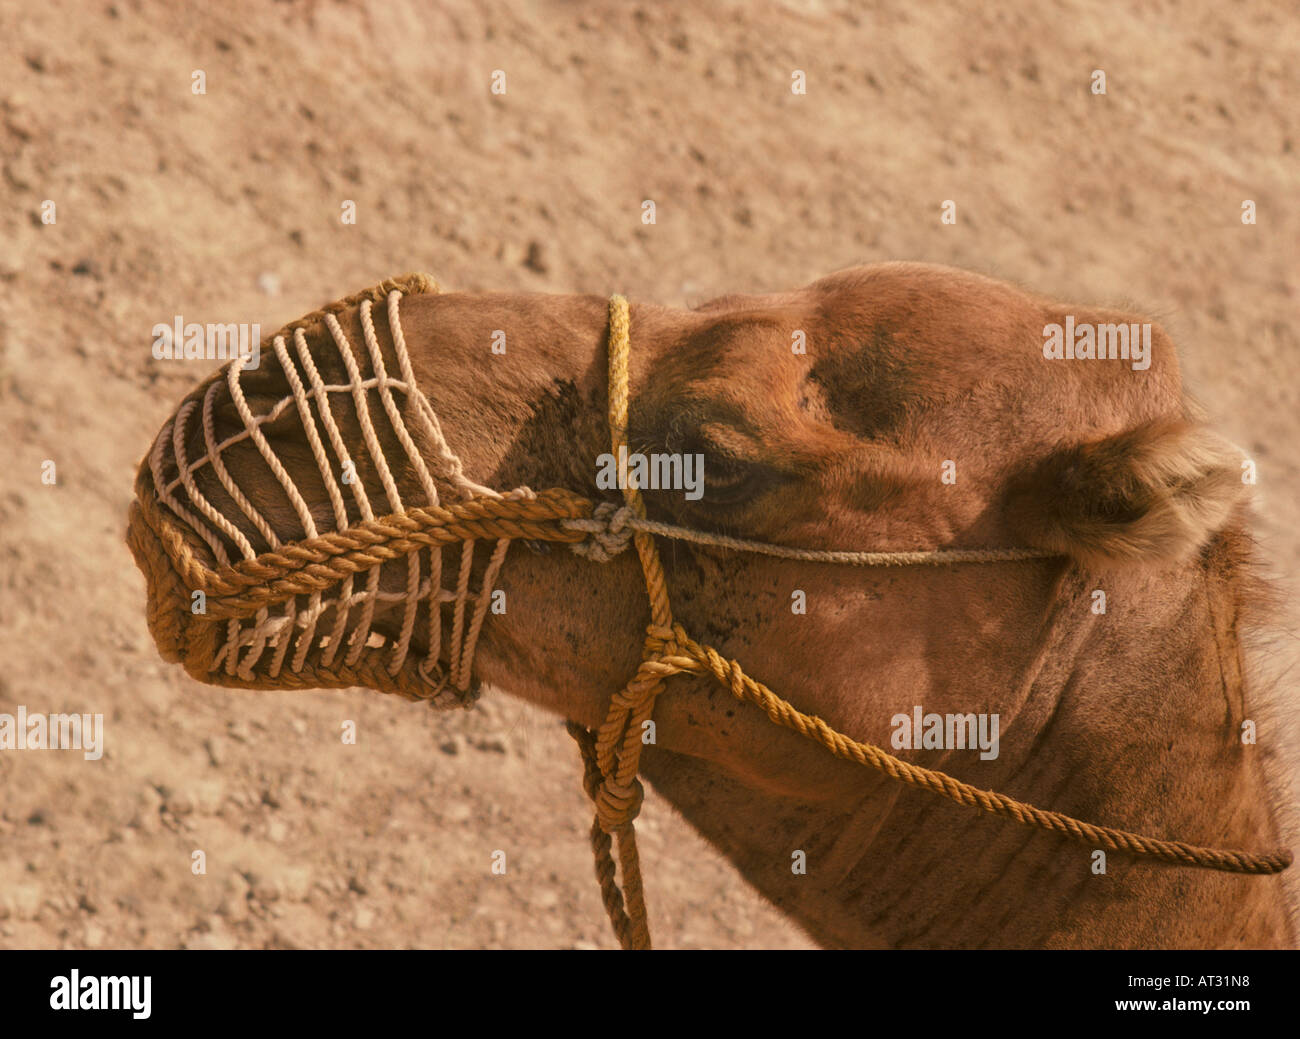 Close up profile of Saharan camel with rope muzzle Stock Photo